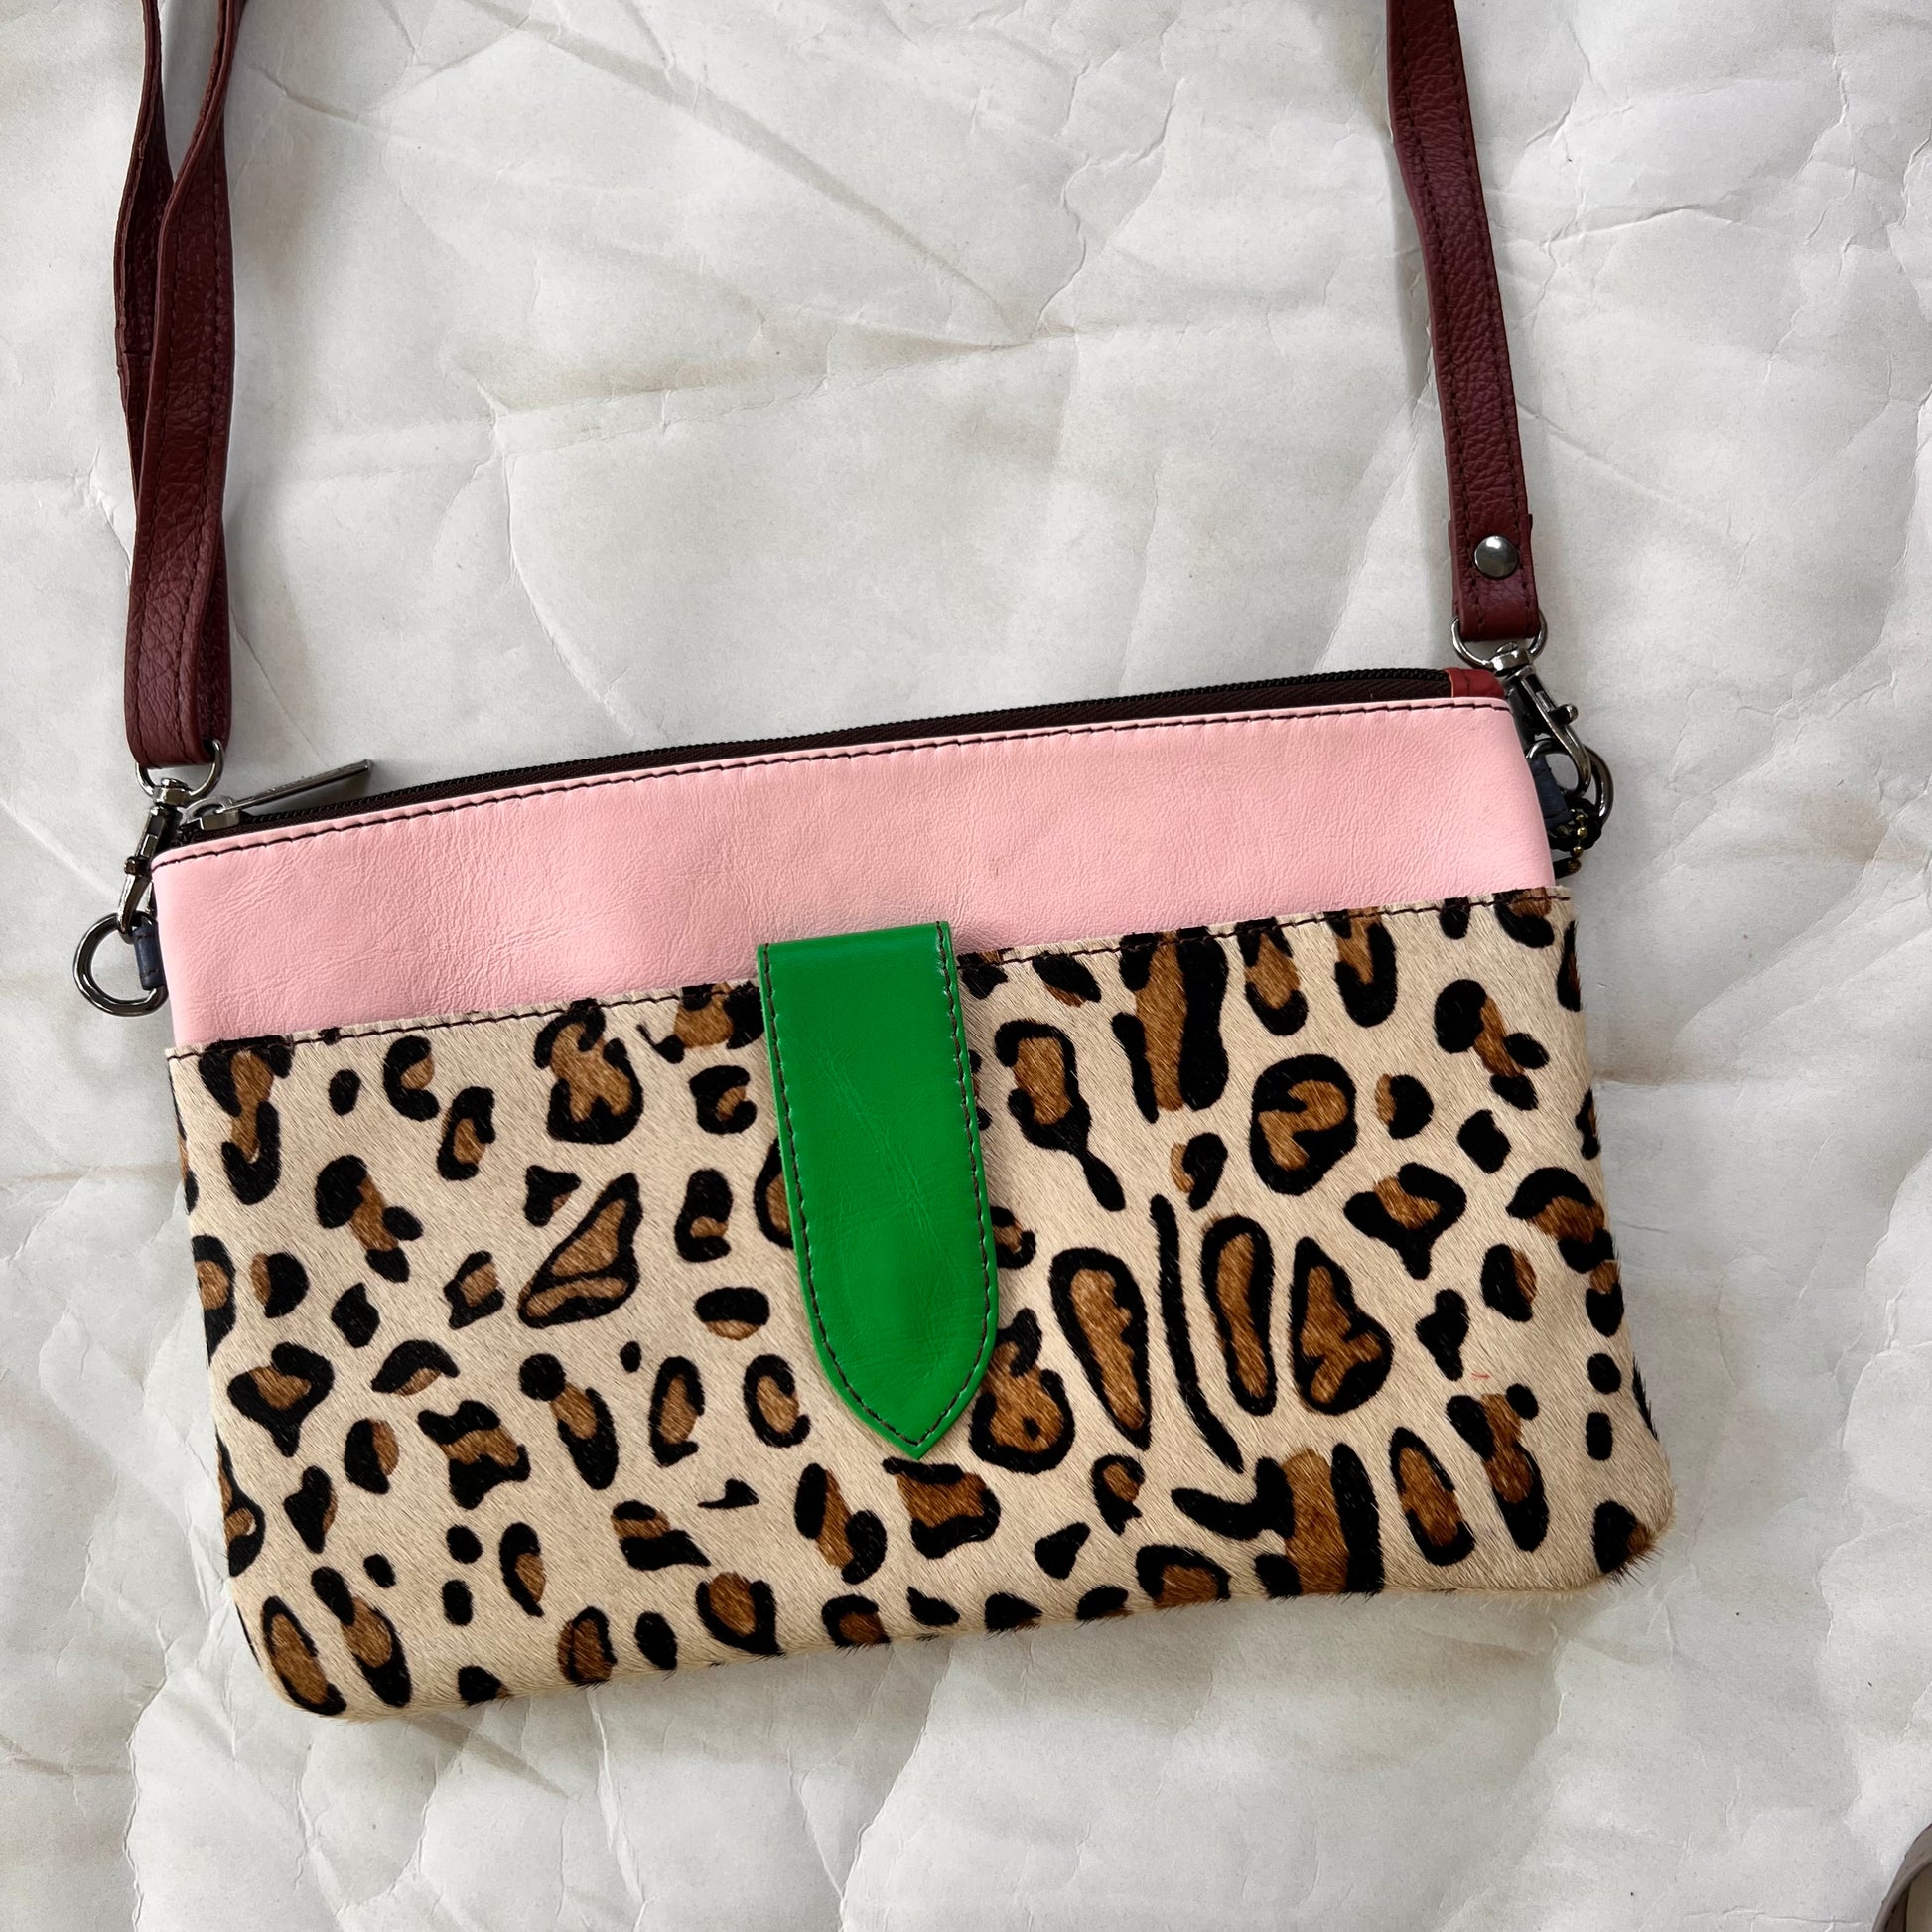 green rectangular bag with cheetah print pocket, green tab, and brown shoulder strap.